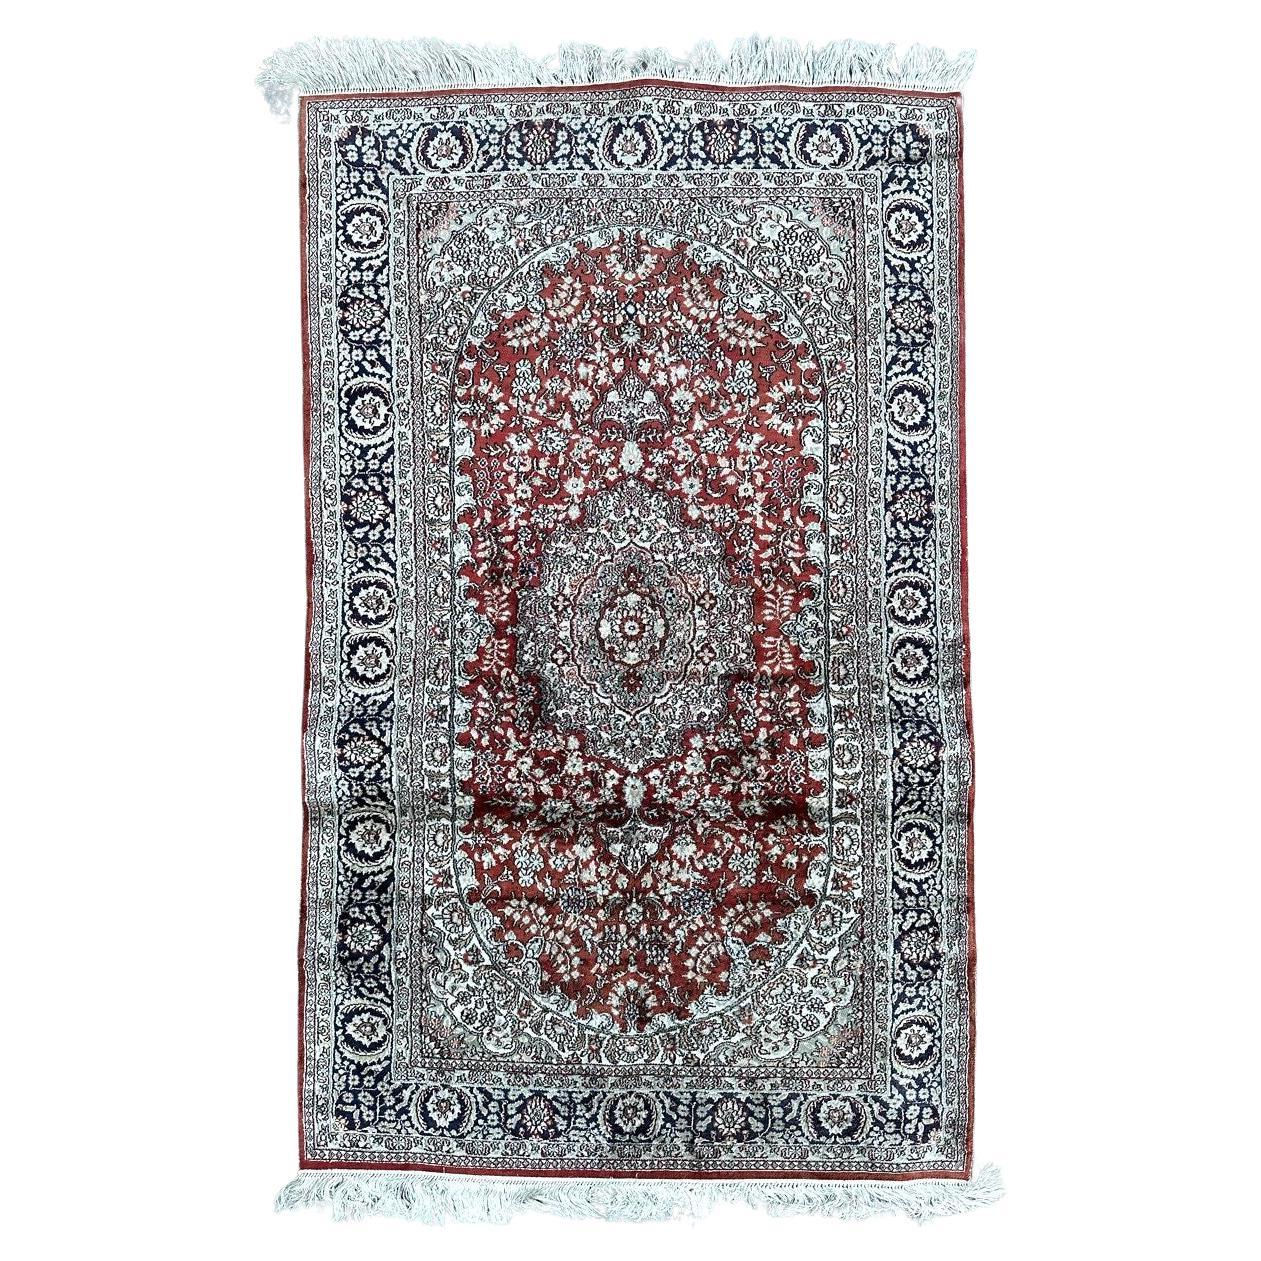 Bobyrug’s Nice very fine Sino Persian silk rug